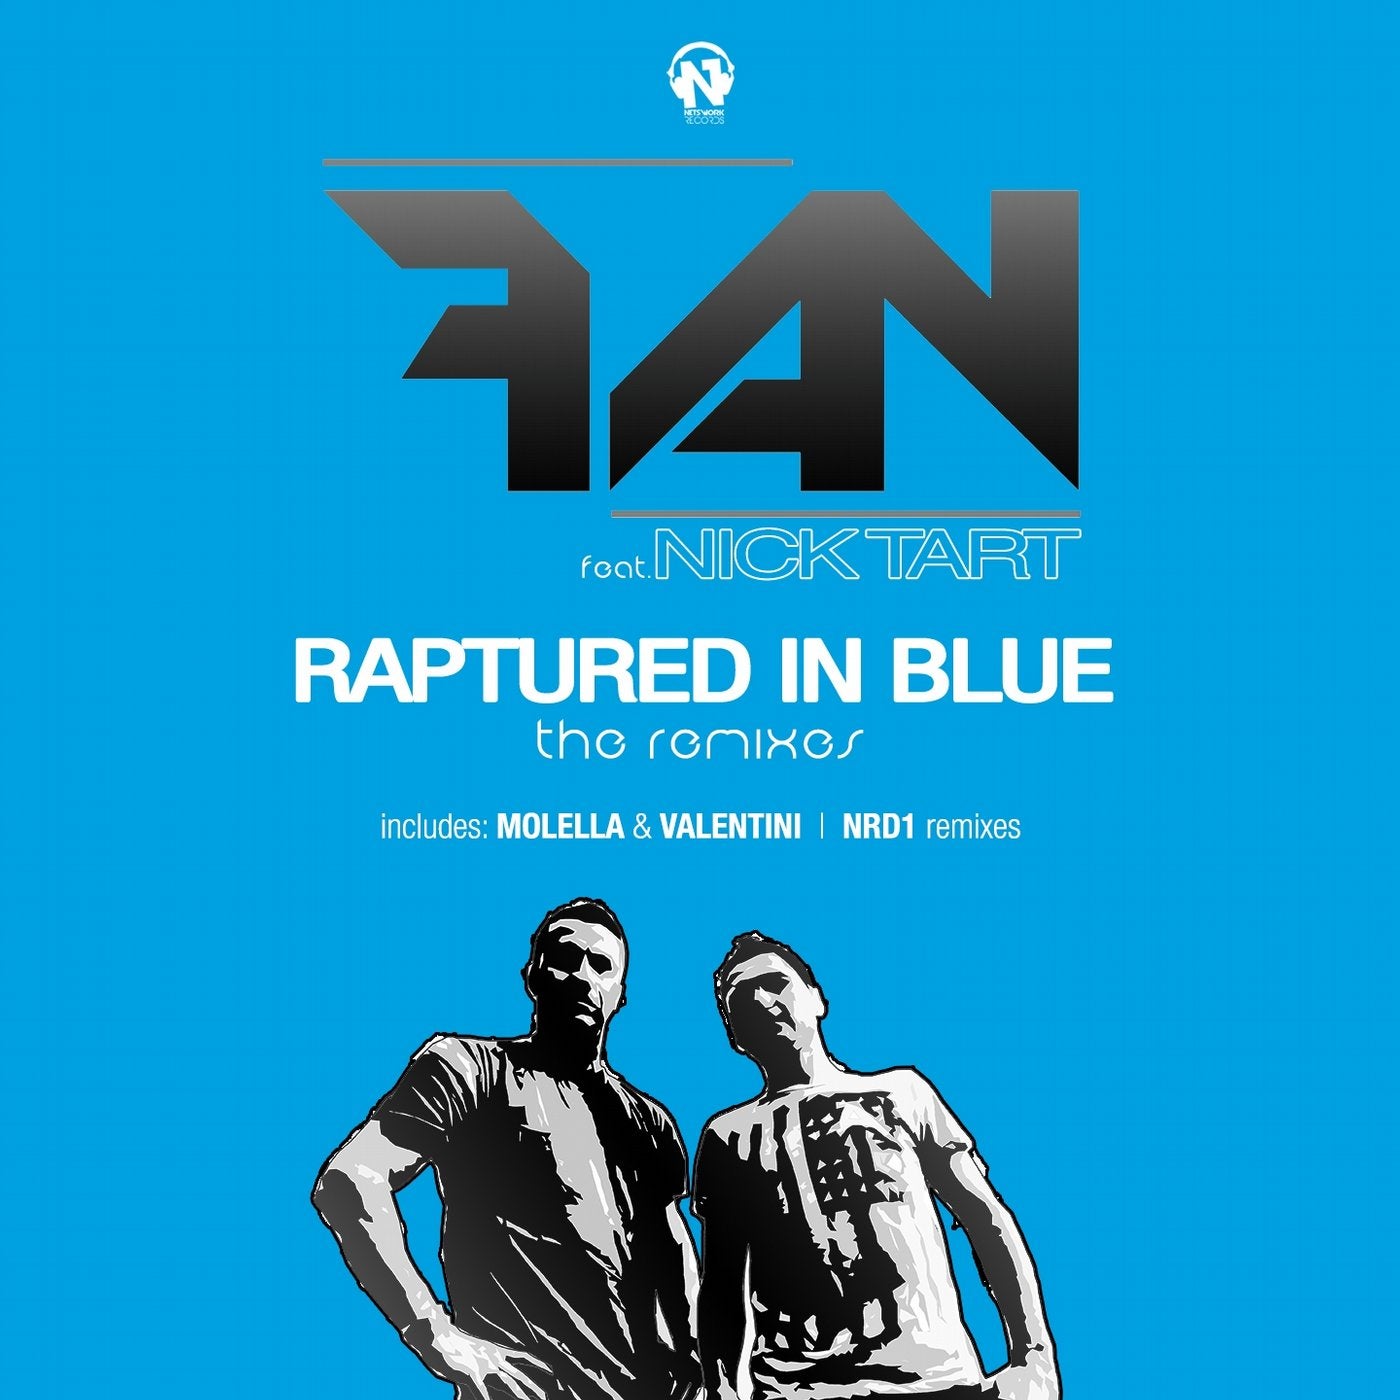 Raptured in Blue (feat. Nick Tart) [The Remixes]